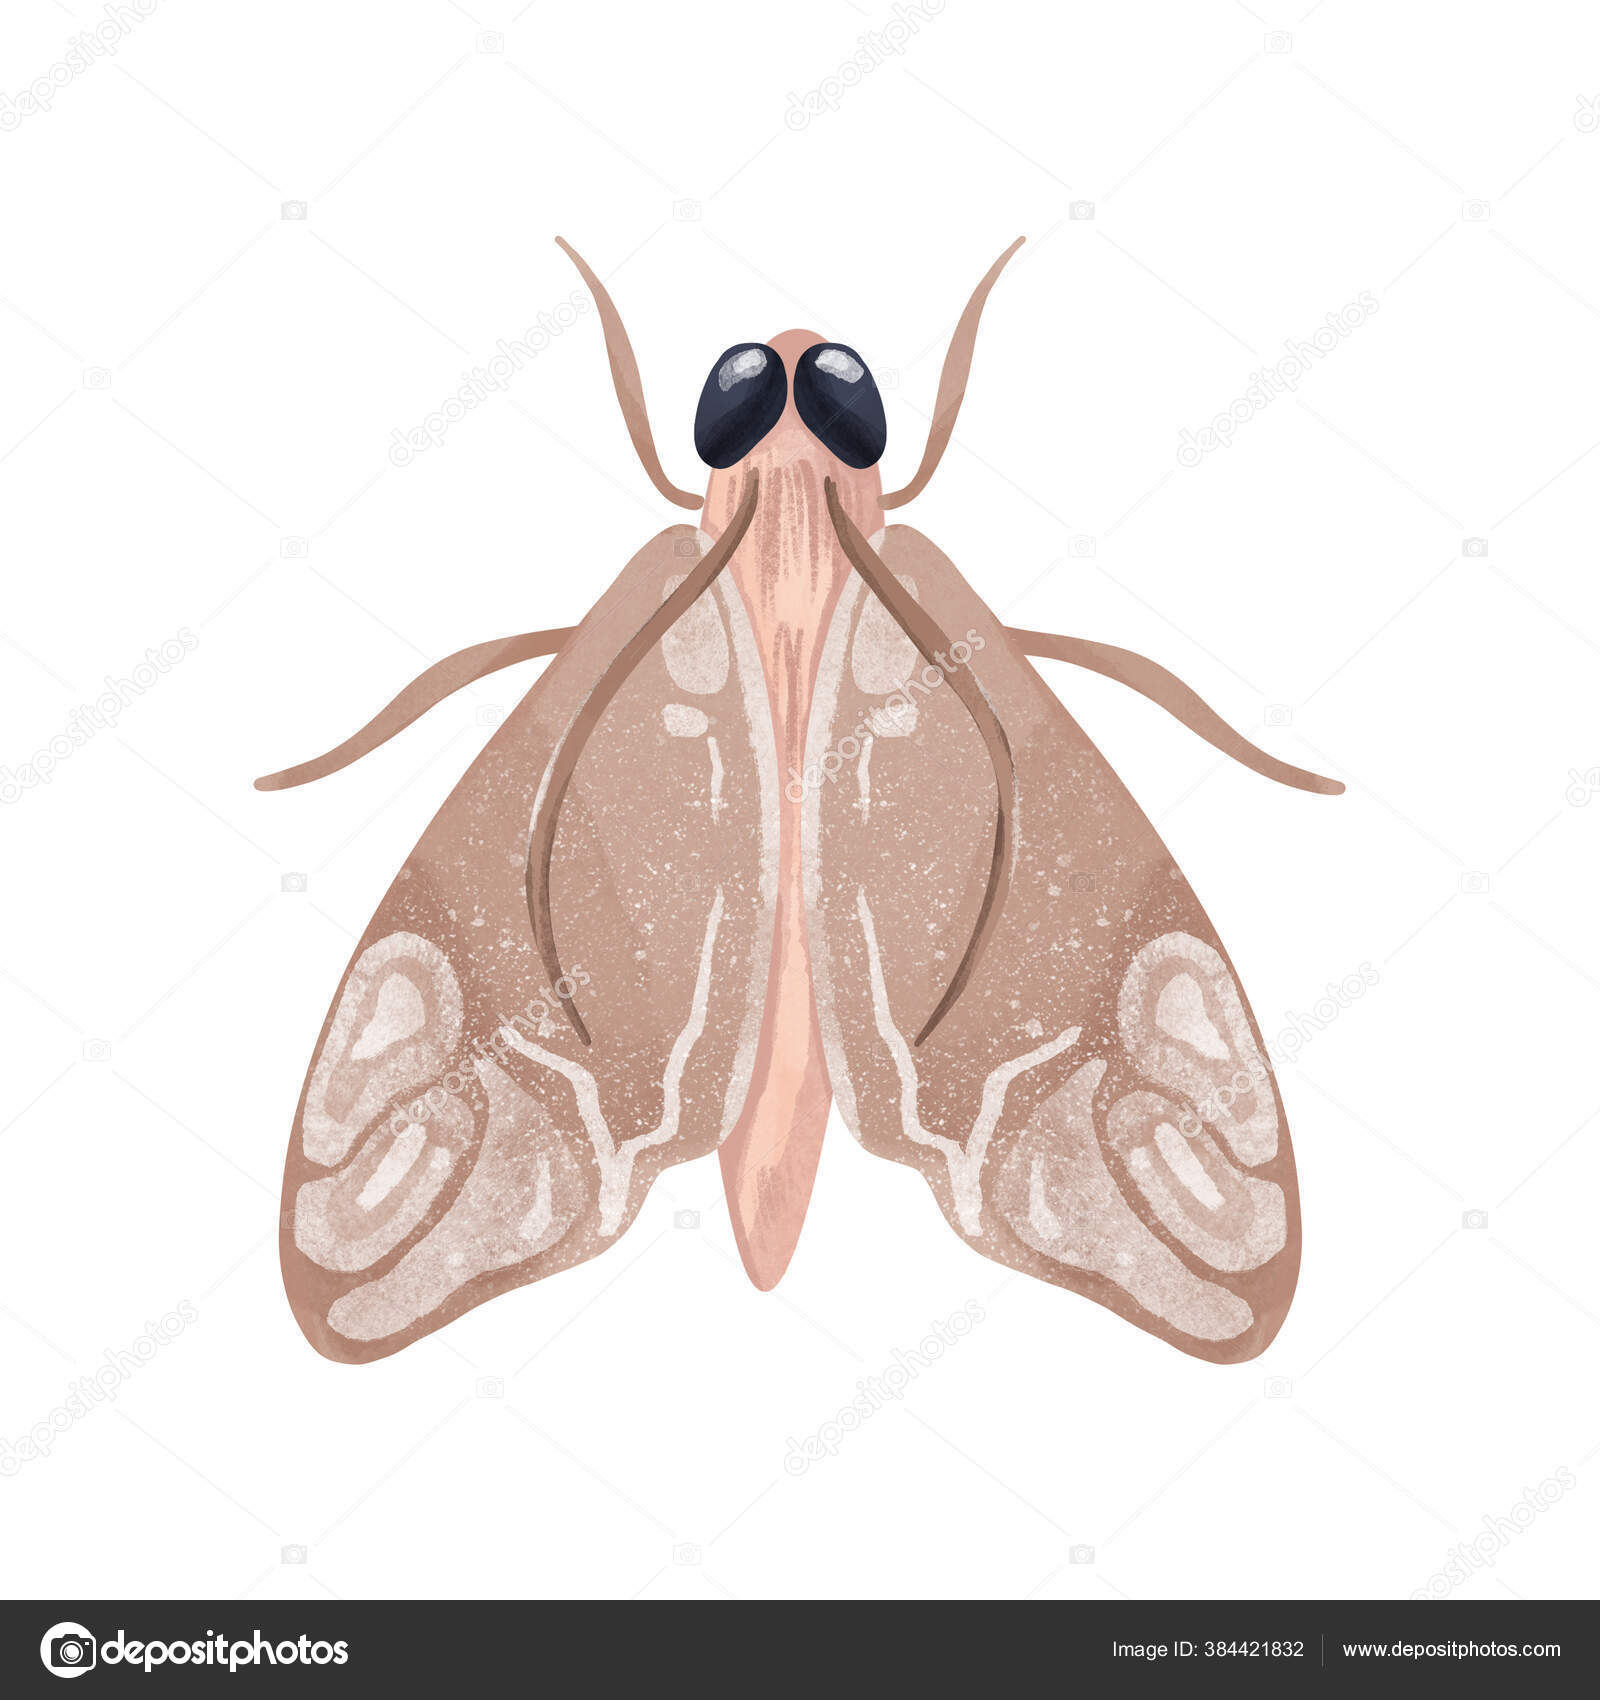 https://st4.depositphotos.com/33375004/38442/i/1600/depositphotos_384421832-stock-illustration-cute-beige-moth-butterfly-antennae.jpg